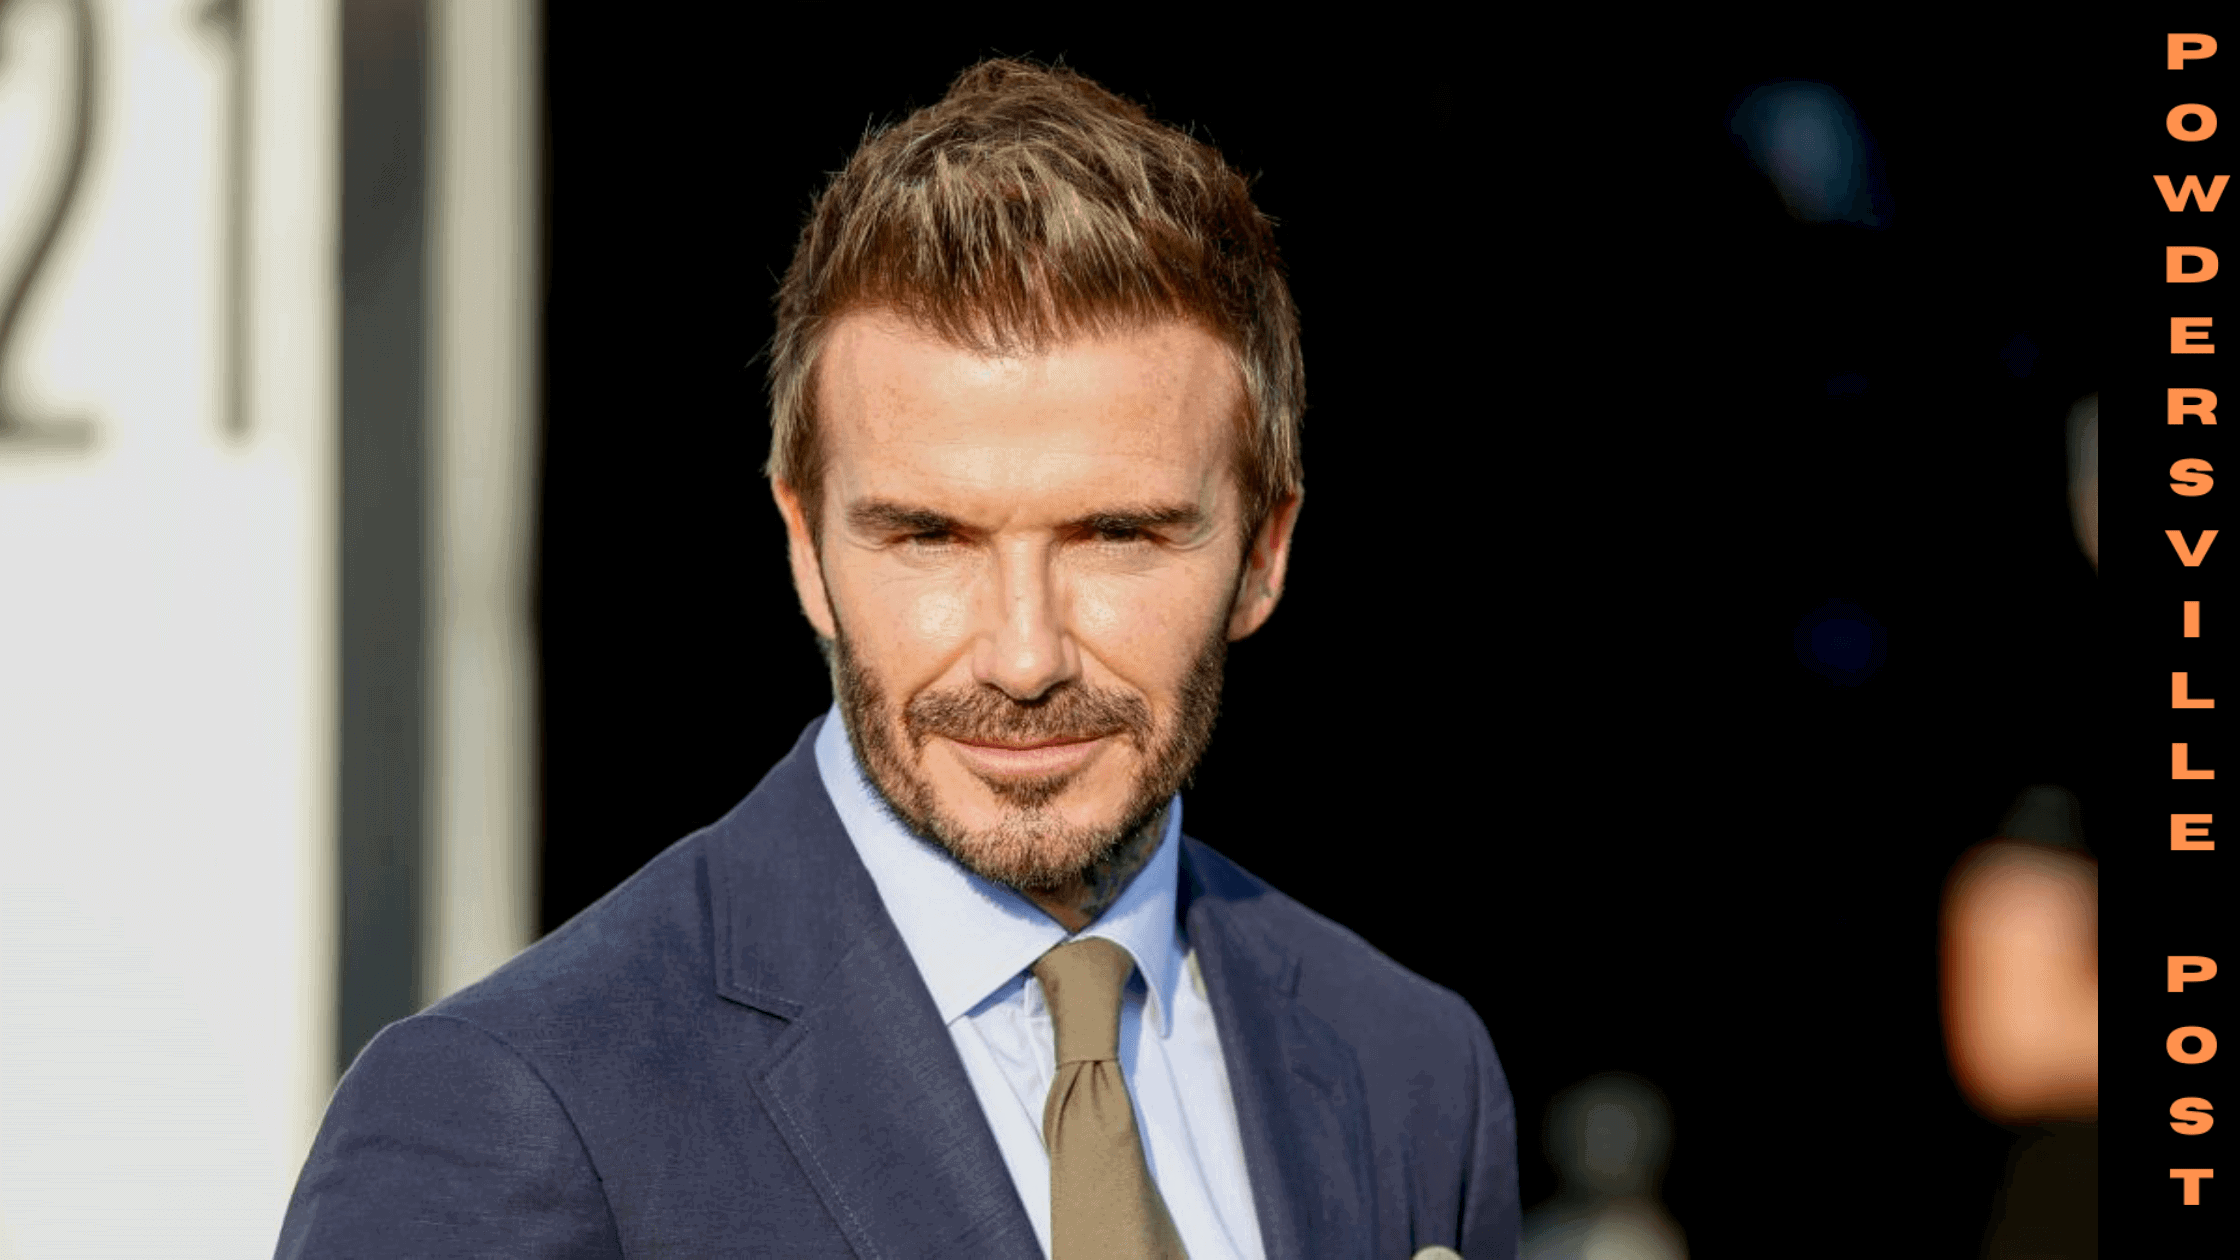 David Beckham Turns Over His Instagram Account To A Ukrainian Doctor